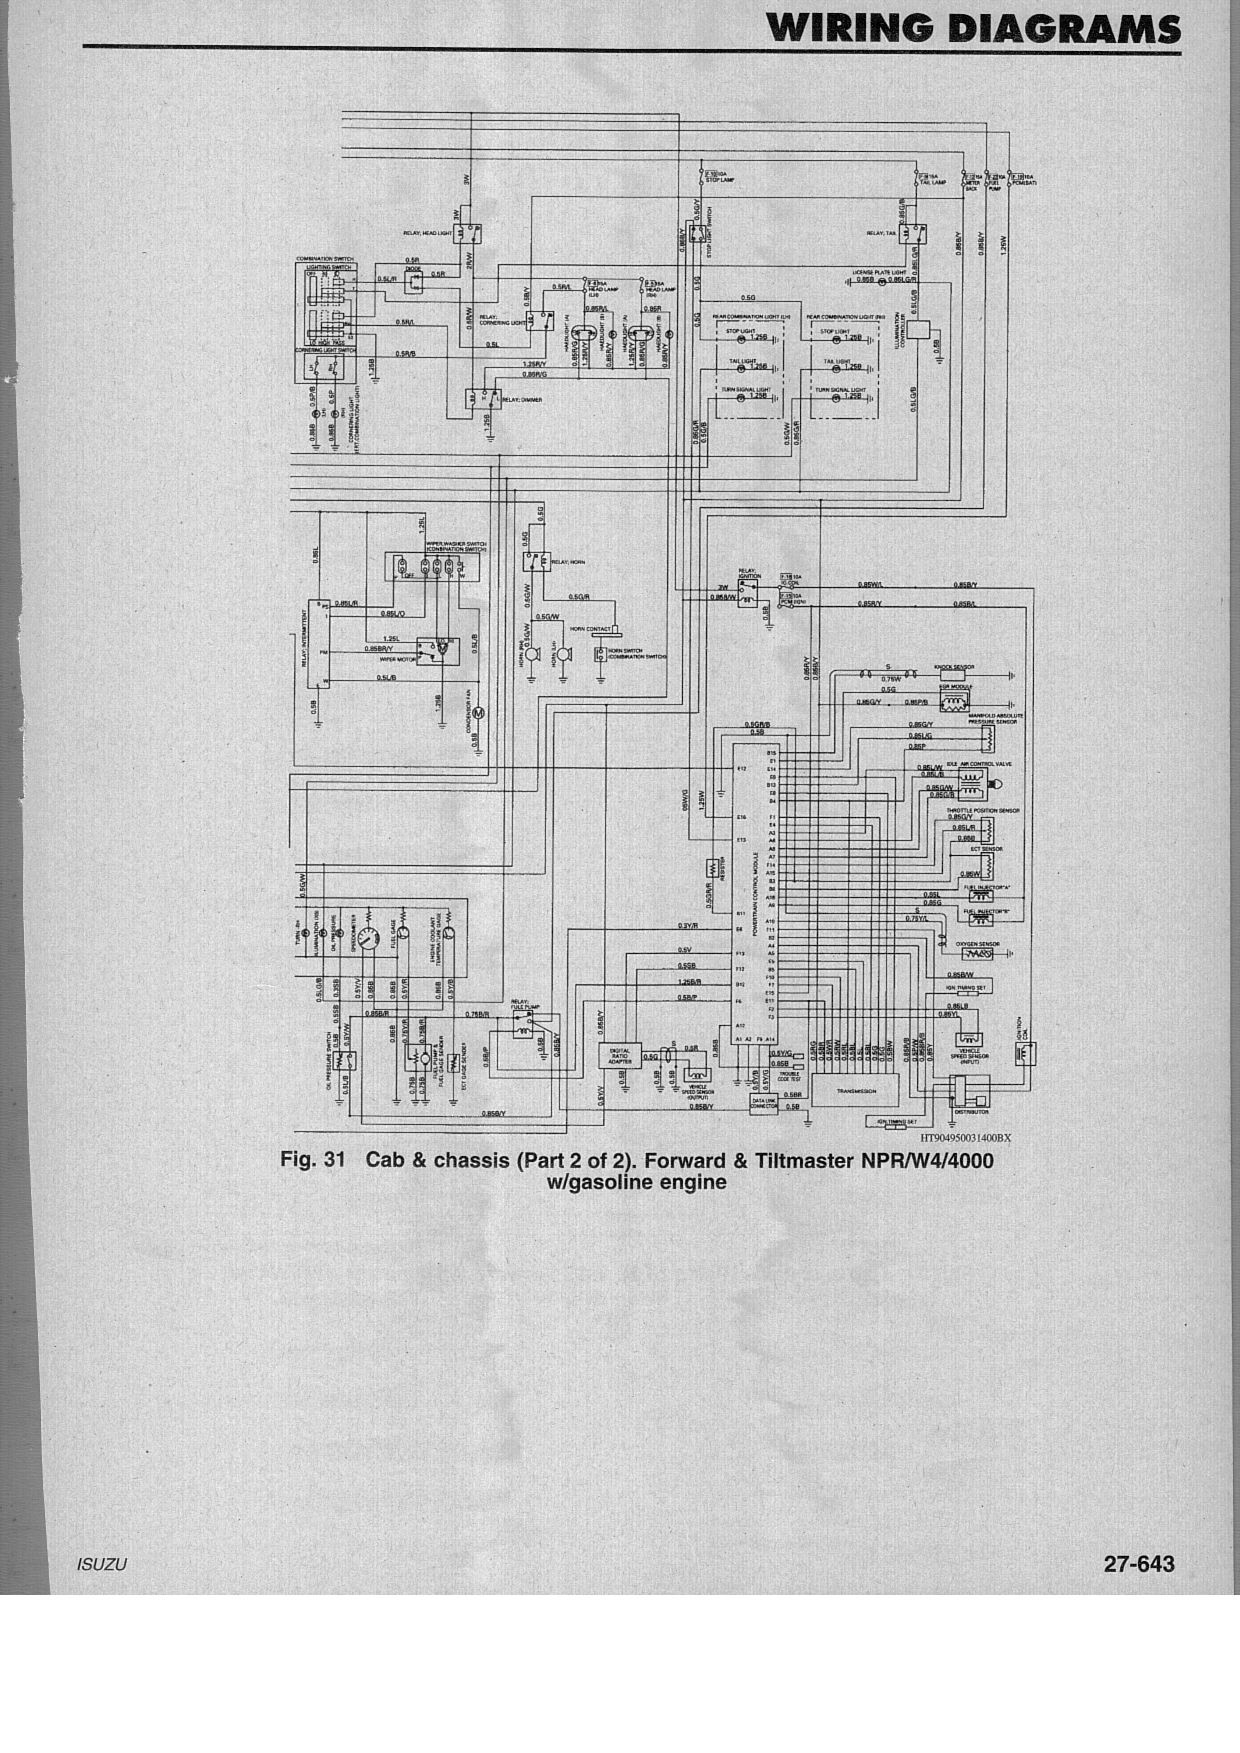 1993 Chey S 10 Headlight Wiring Diagram Diagram] 1993 isuzu Npr Wiring Diagram Full Version Hd Of 1993 Chey S 10 Headlight Wiring Diagram